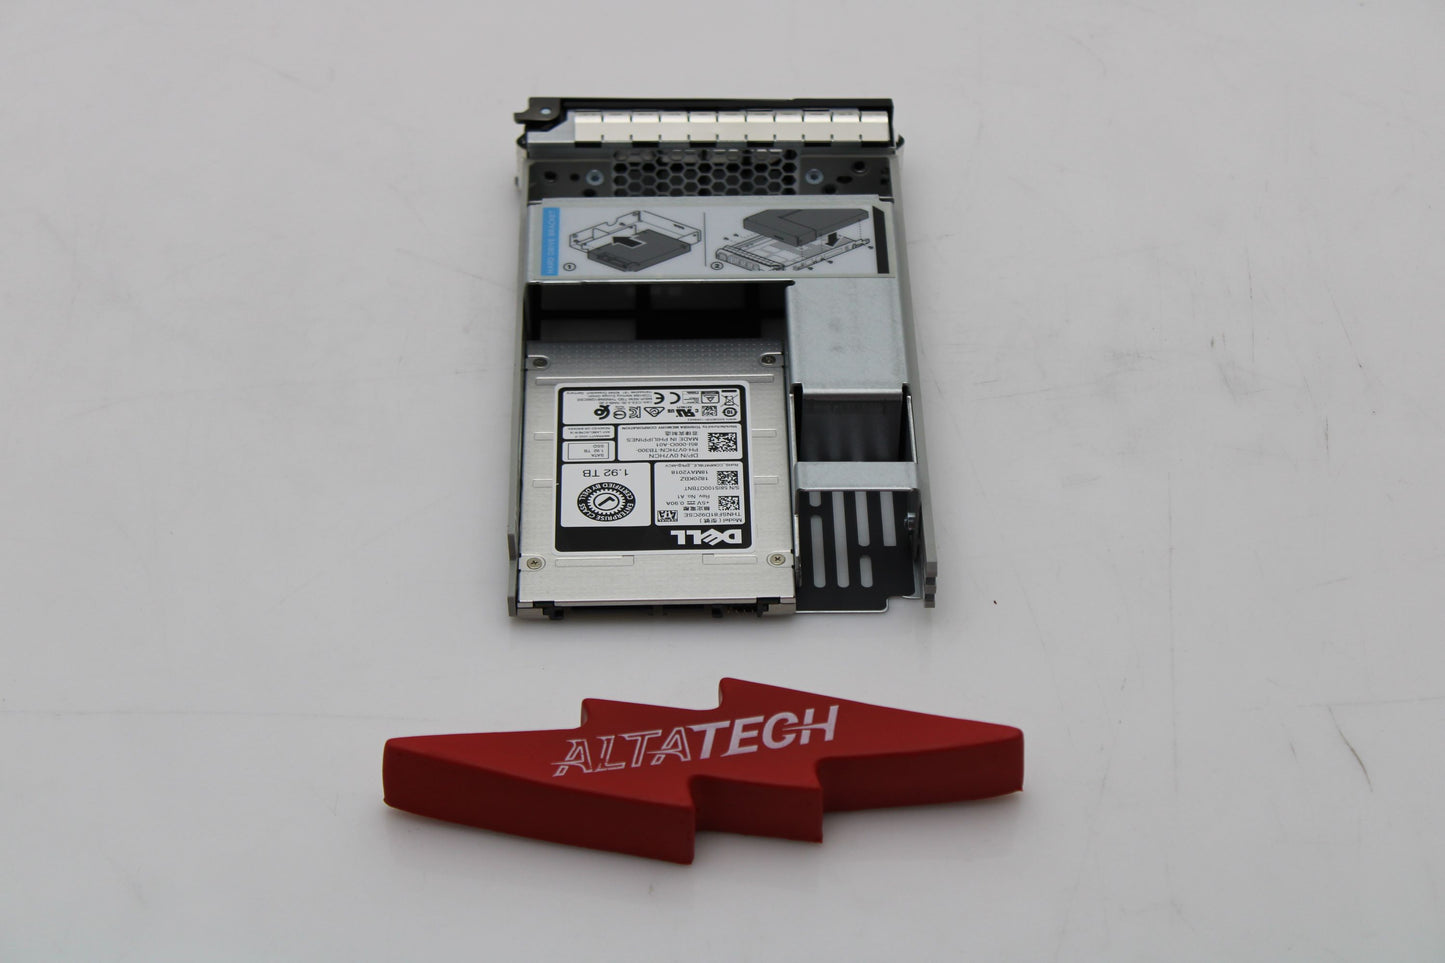 Toshiba THNSF81D92CSE 1.92TB SSD SATA 3.5 Hybrid 6G RI, Used